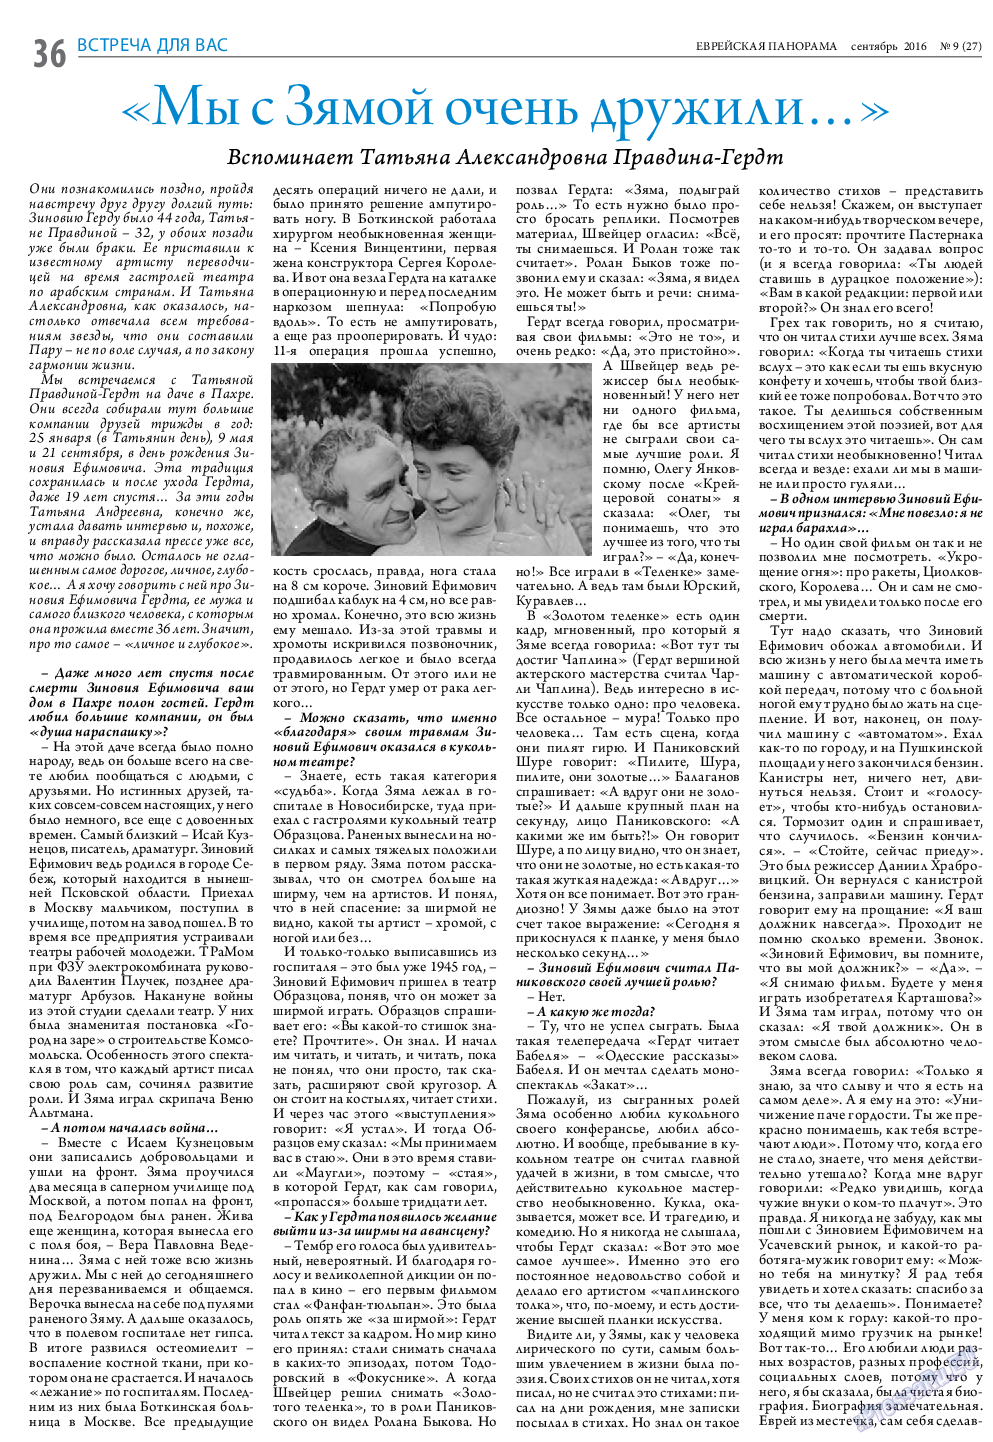 Еврейская панорама, газета. 2016 №9 стр.36